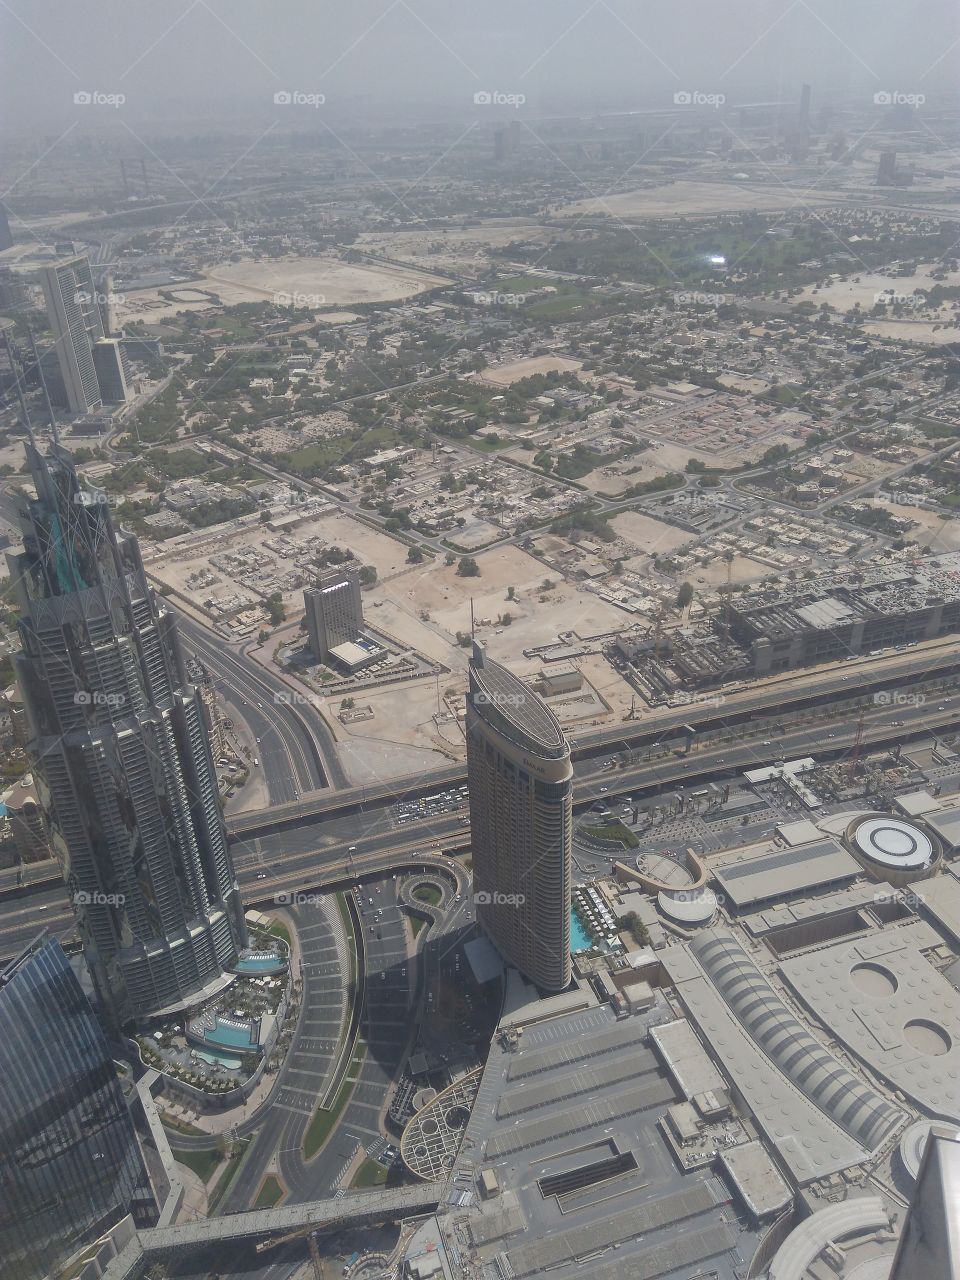 At the Top of Burj Khalifa